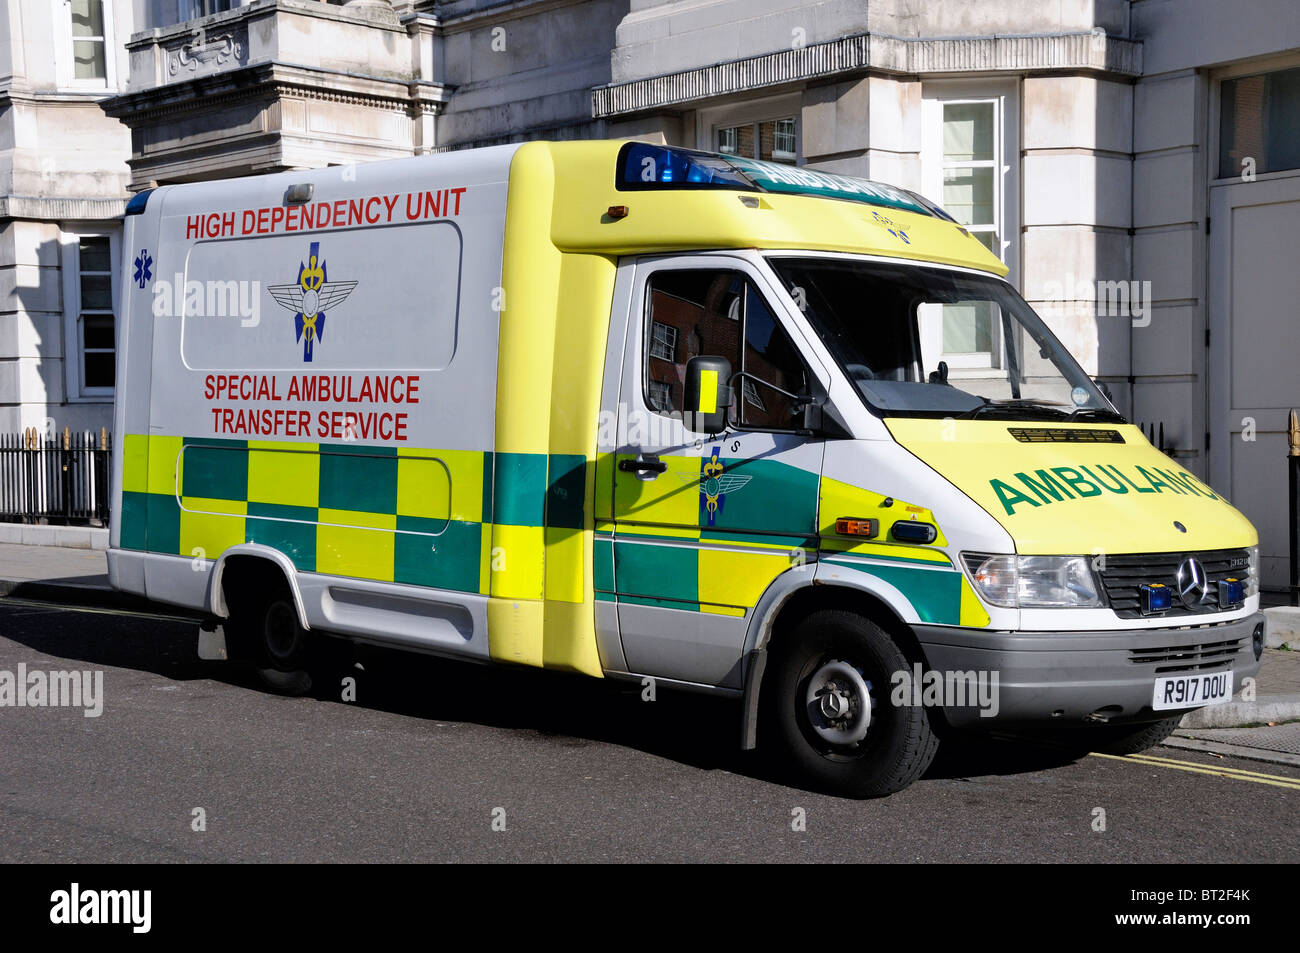 High Dependency Unit Special Ambulance Transfer Service outside The Heart Hospital London England UK Stock Photo